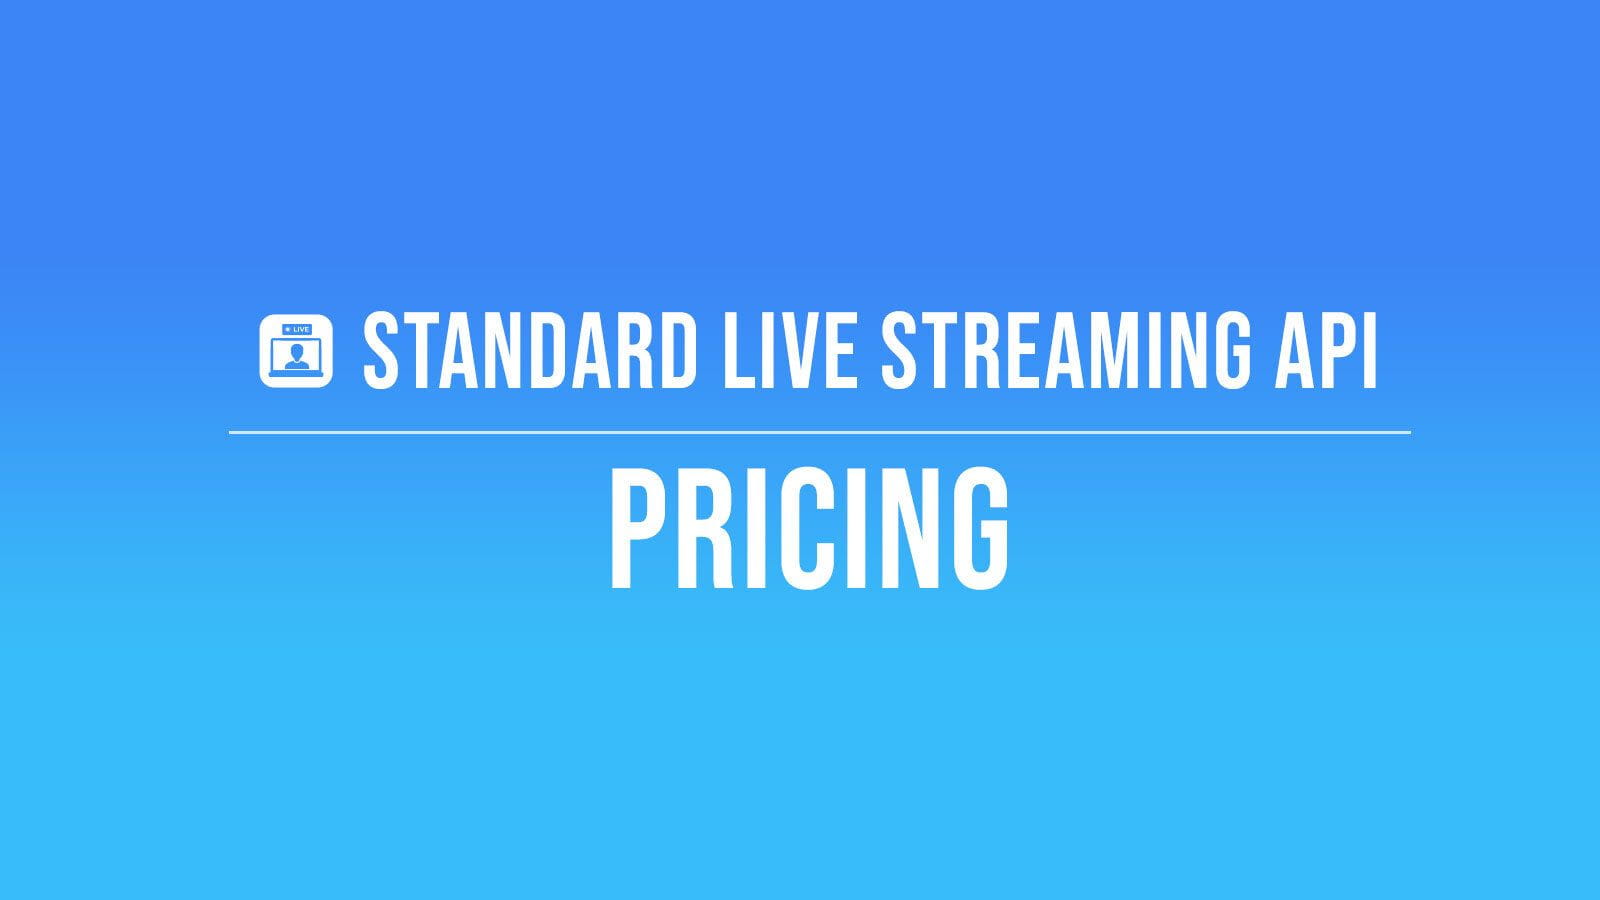 Standard Live Streaming API Pricing